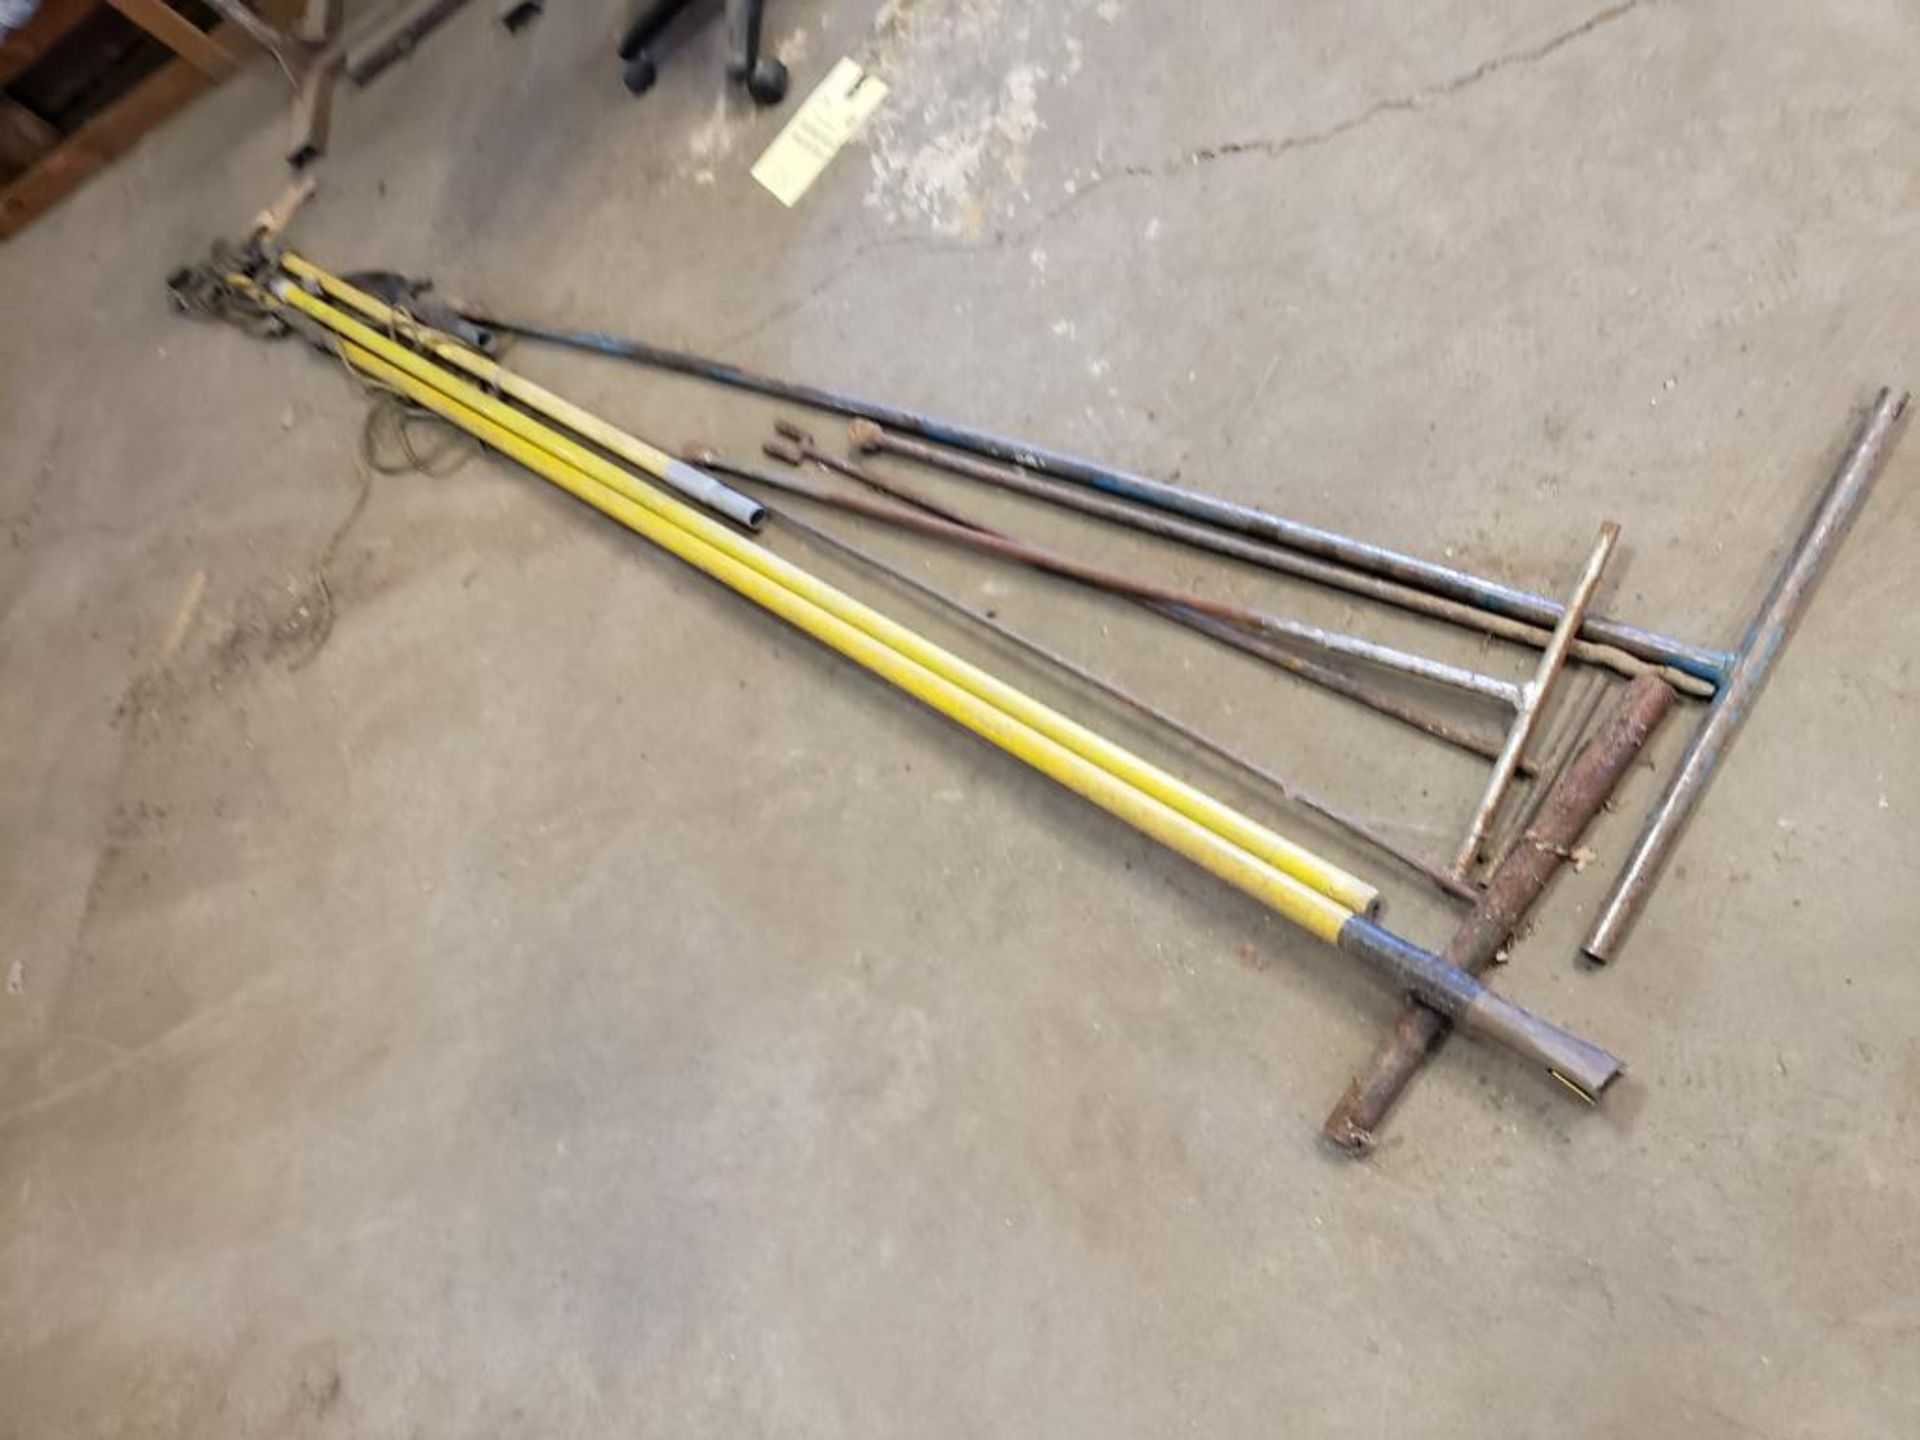 Assorted valve tools.